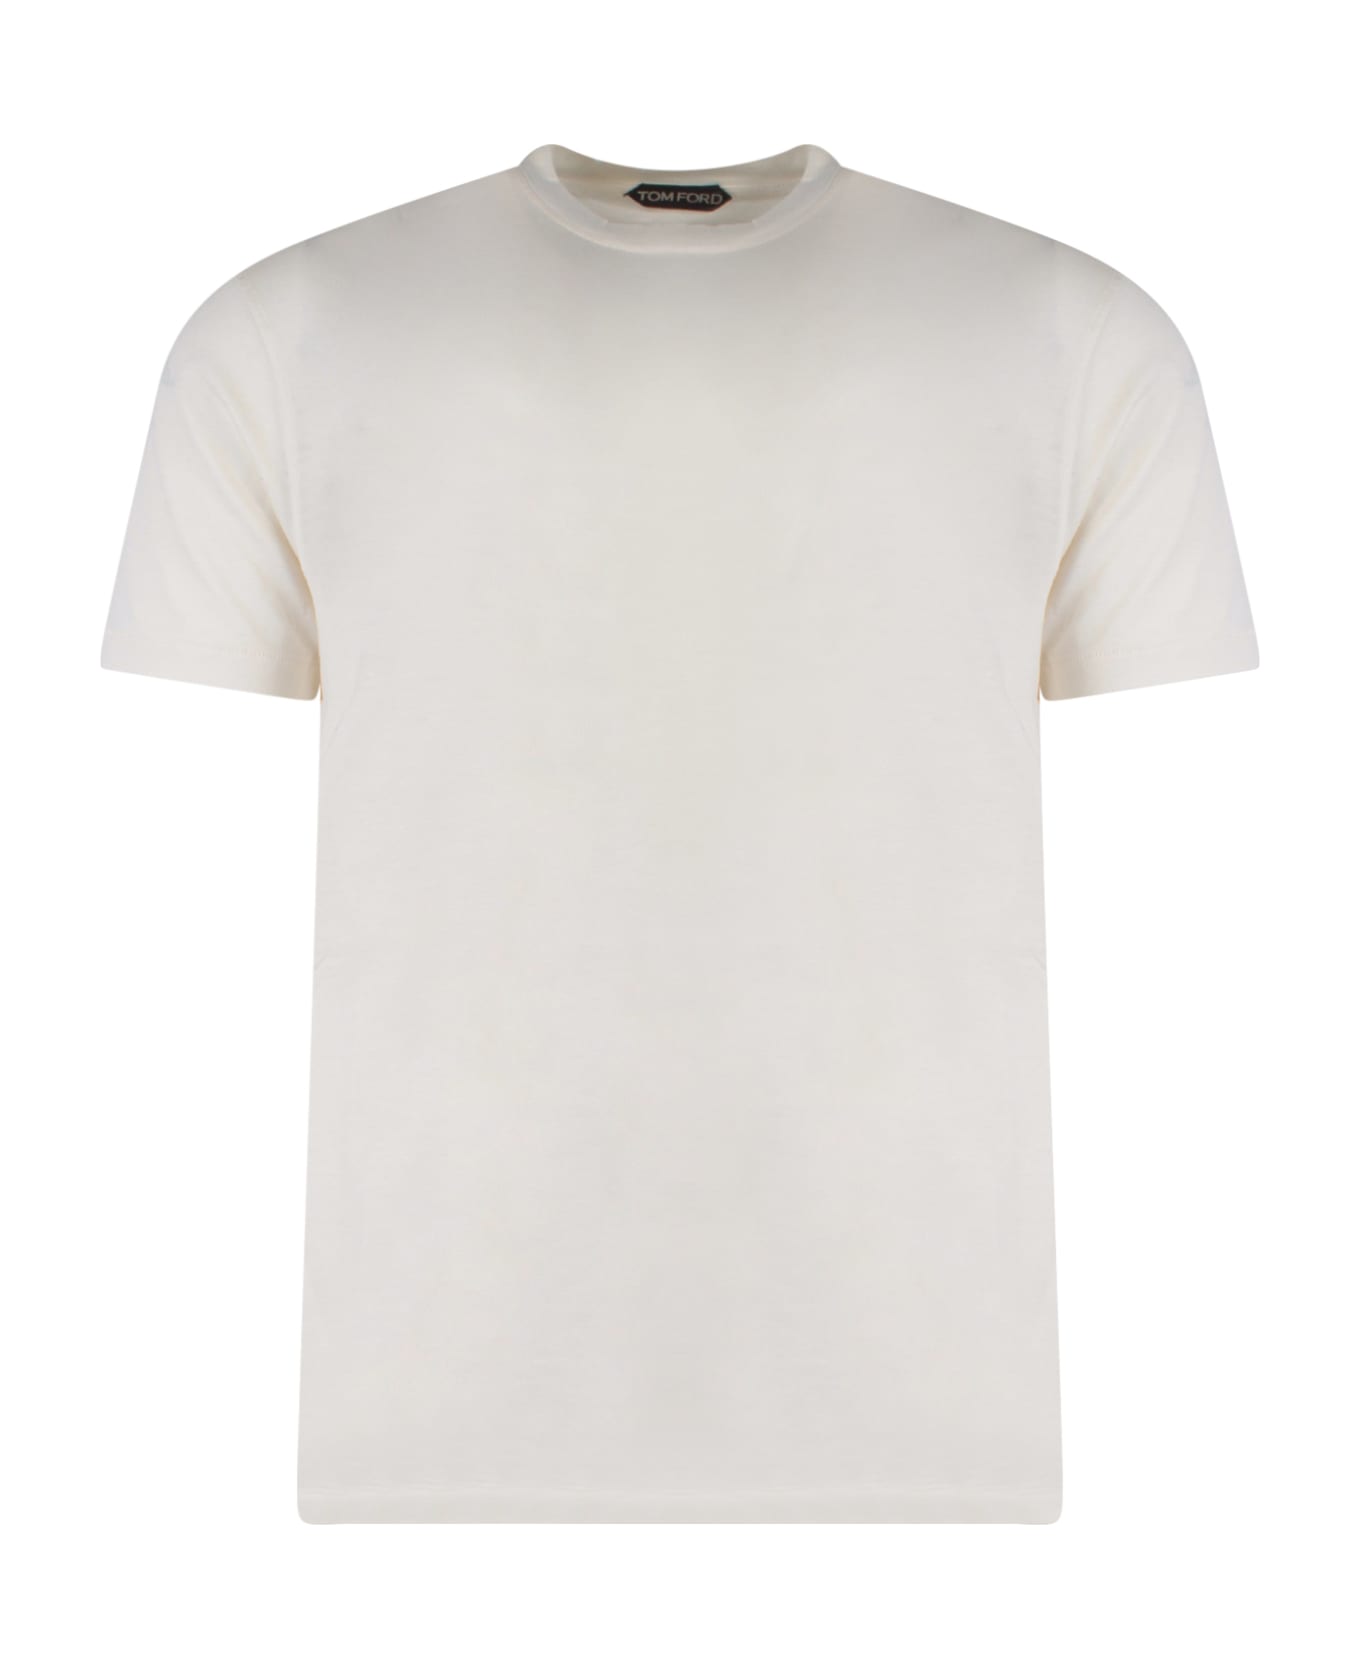 Tom Ford T-shirt - NEUTRALS